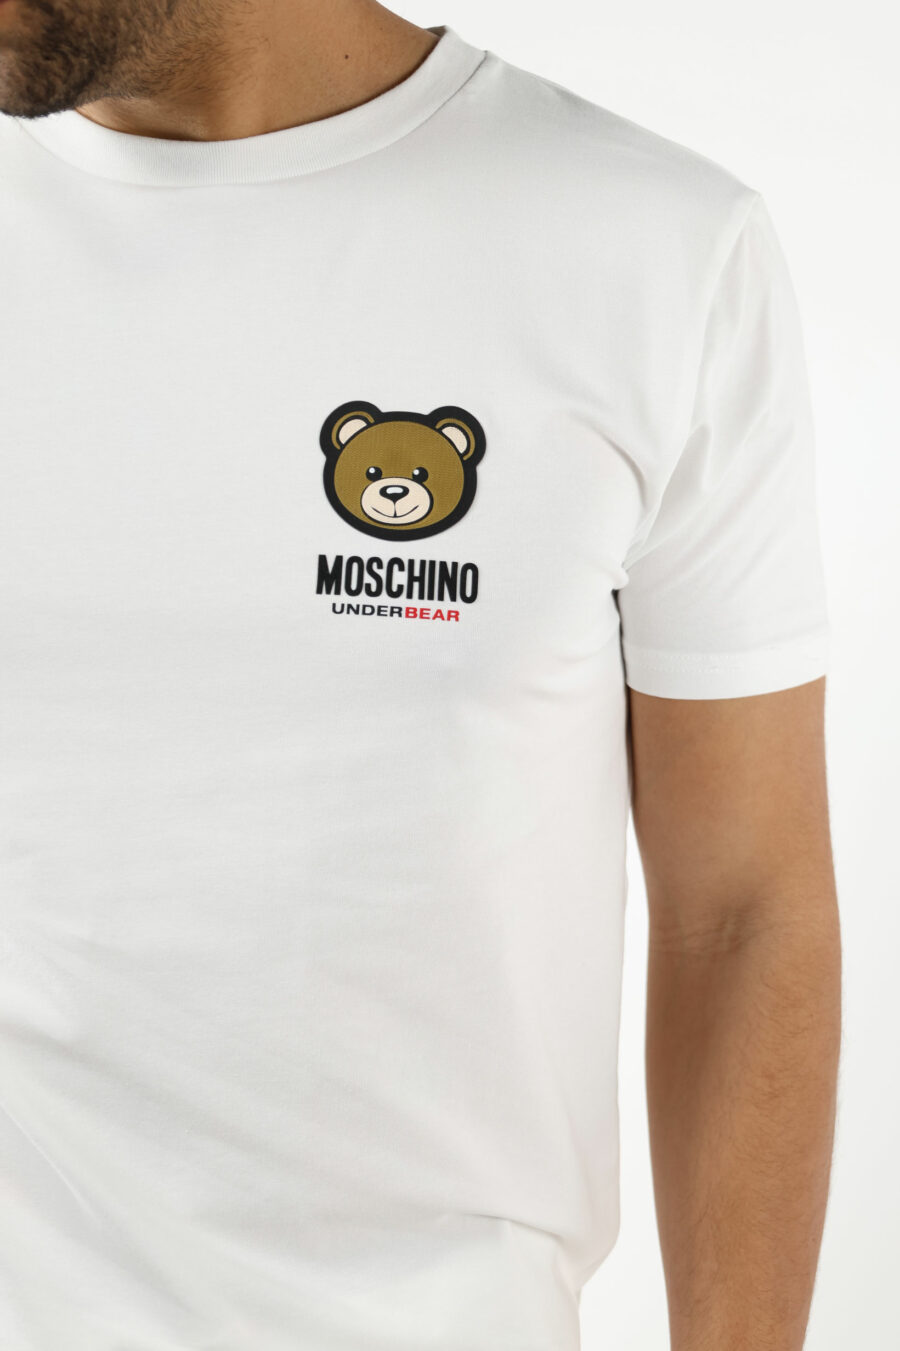 T-shirt white with mini logo bear patch "underbear" - 111023